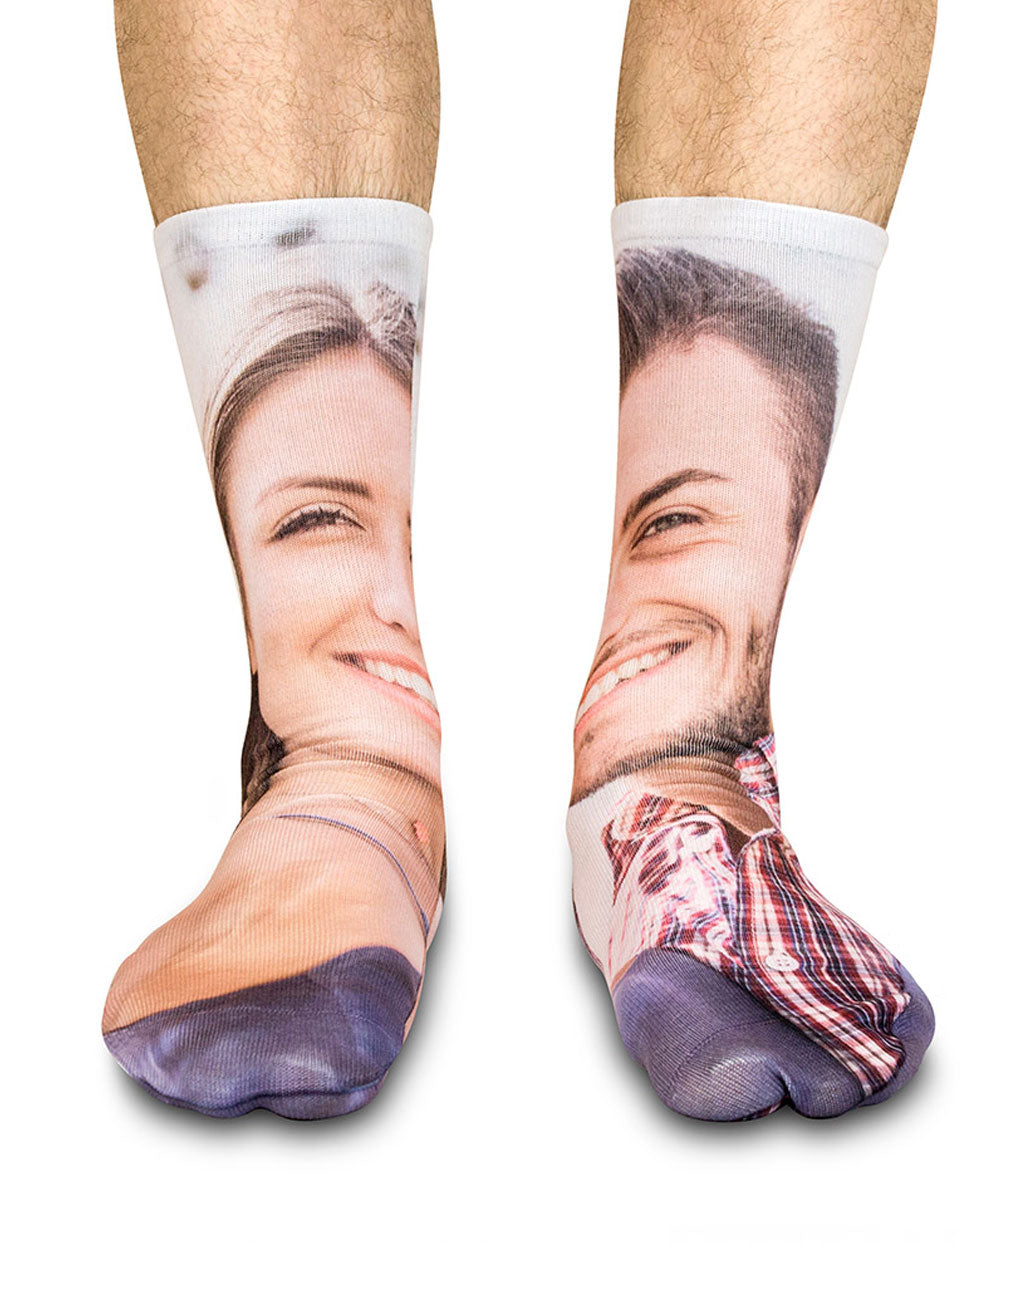 Couples Face Custom Socks